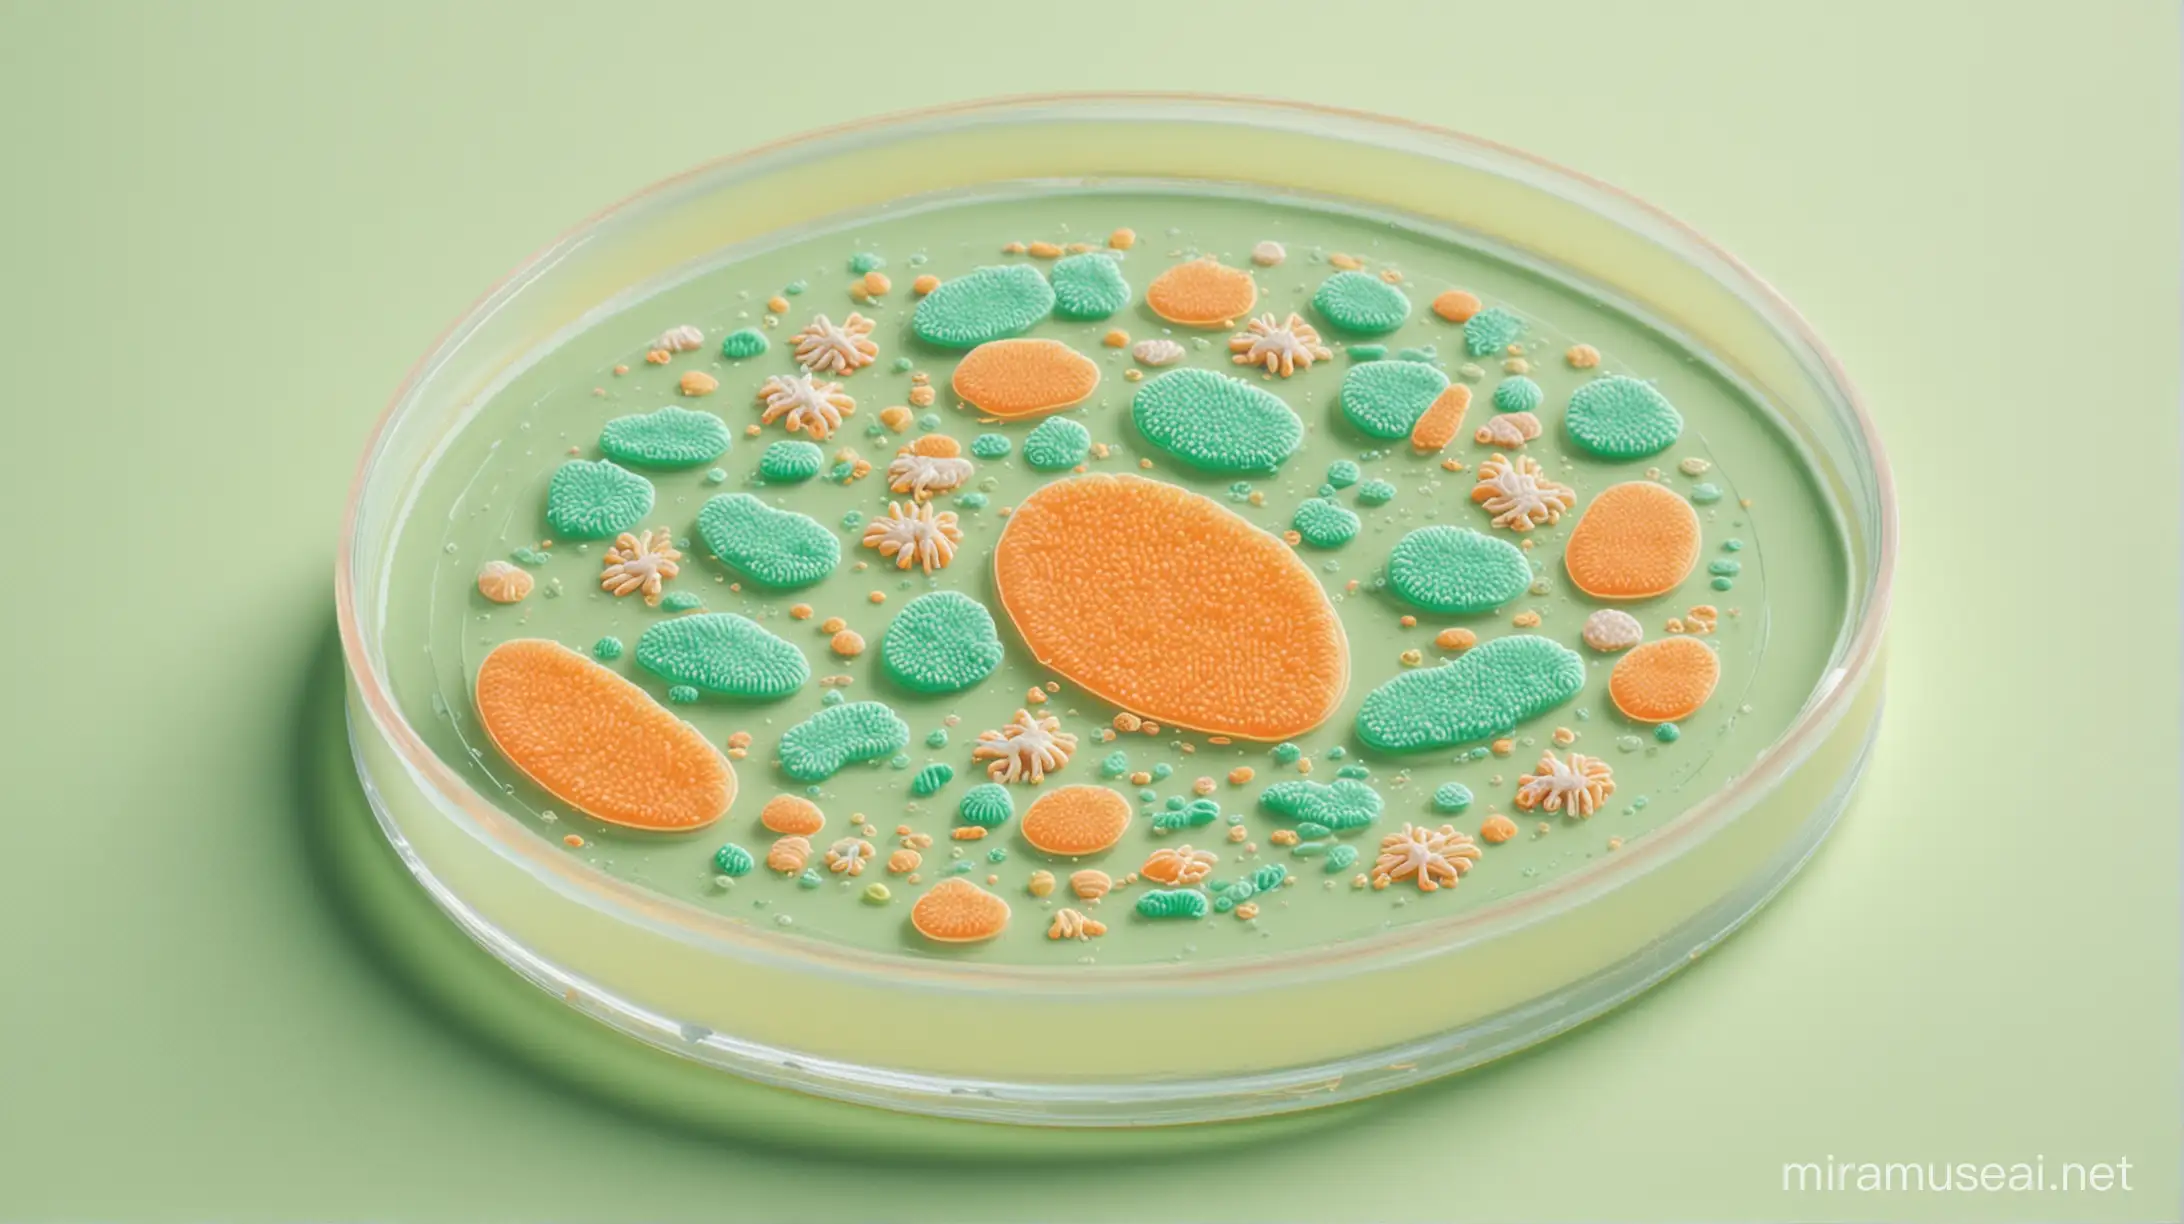 Animated Disney Style Bacteria Colony in Pastel Petri Dish